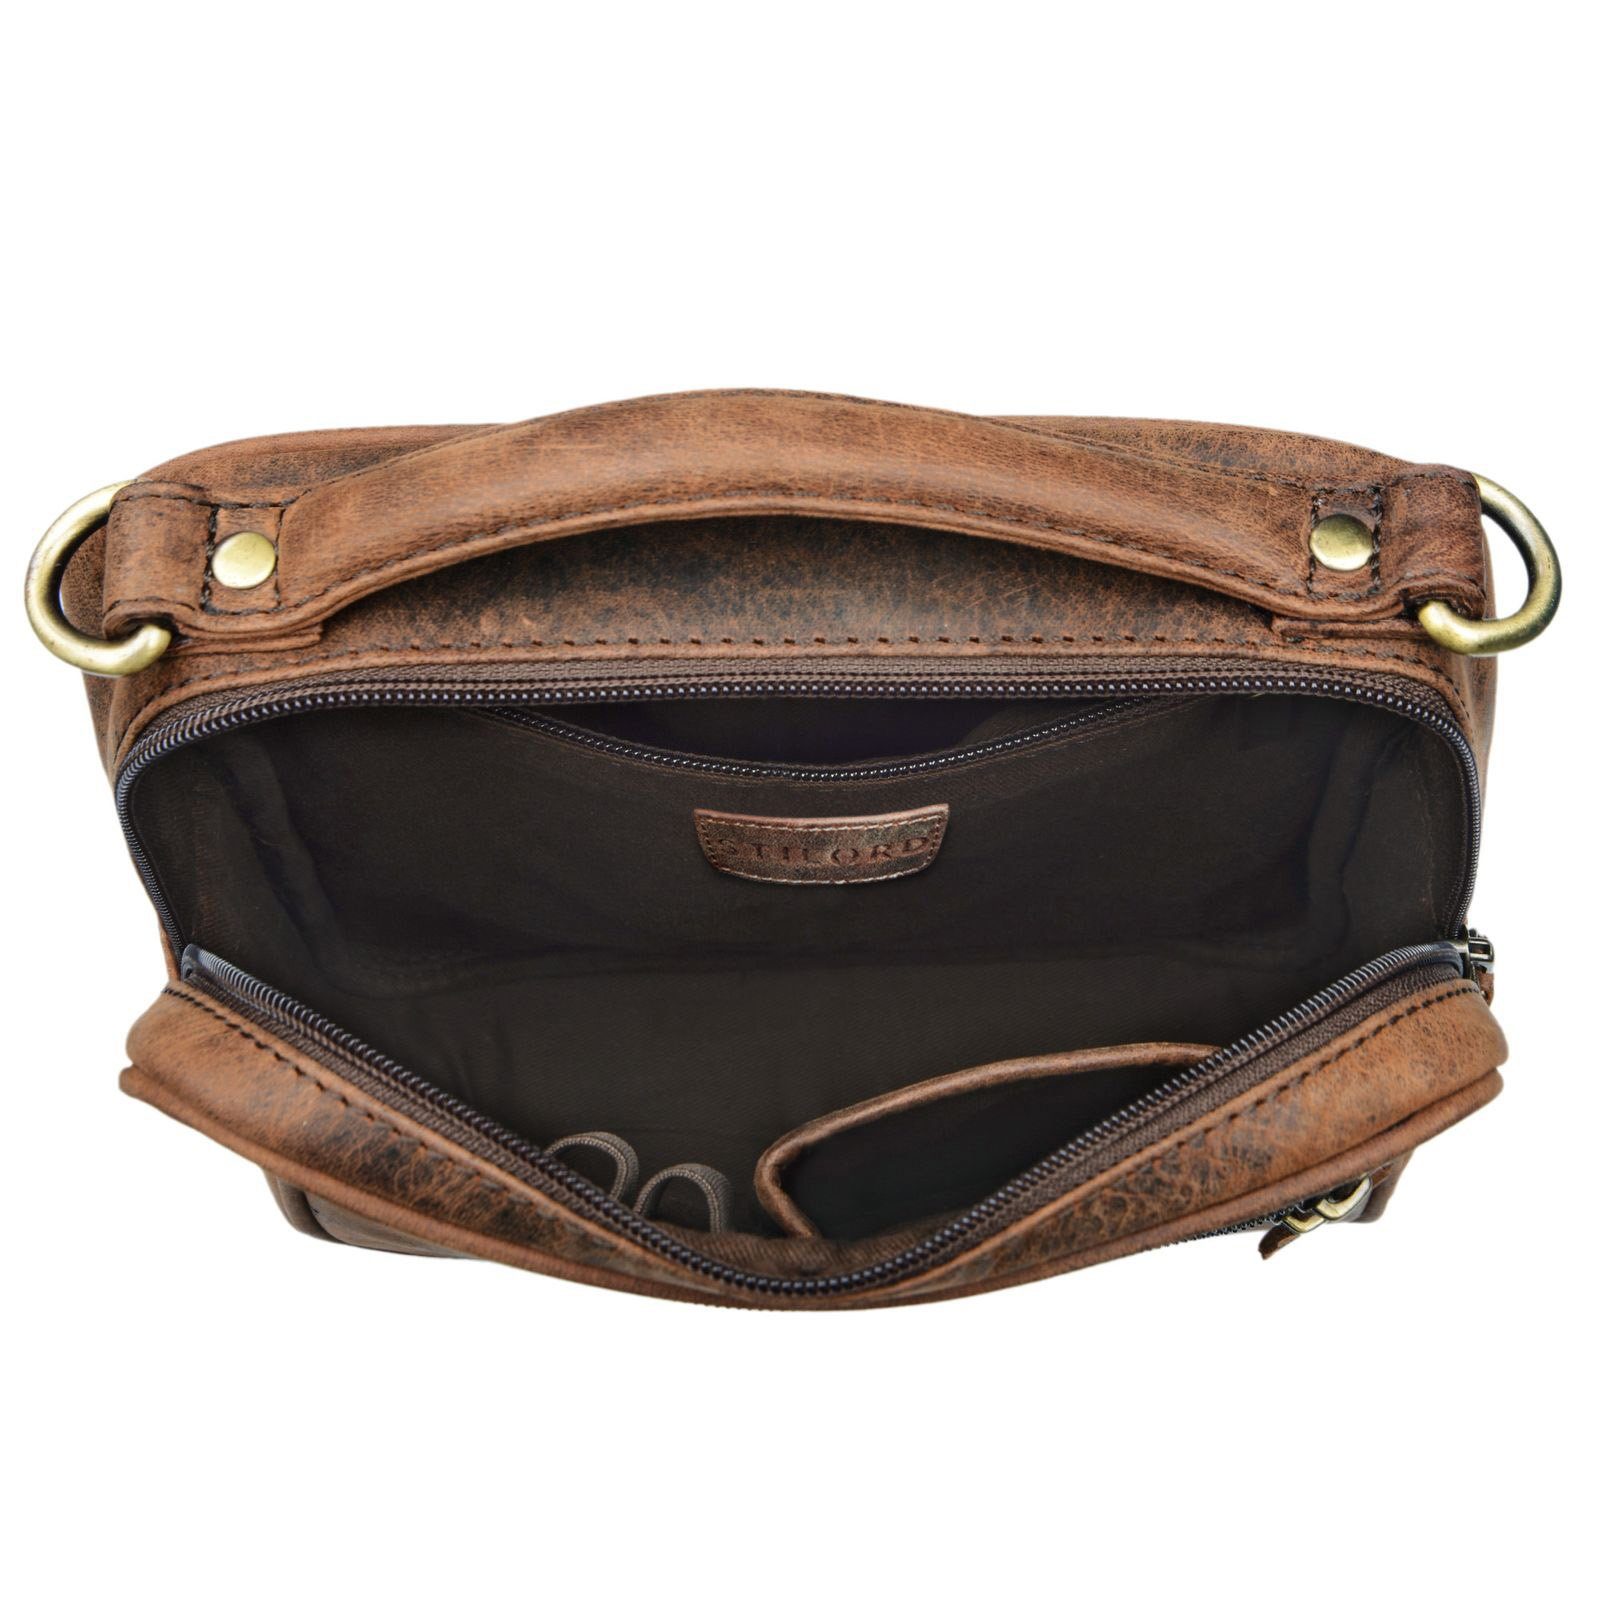 STILORD Messenger Bag "Mats" - Handtasche braun Leder Vintage sepia Herren